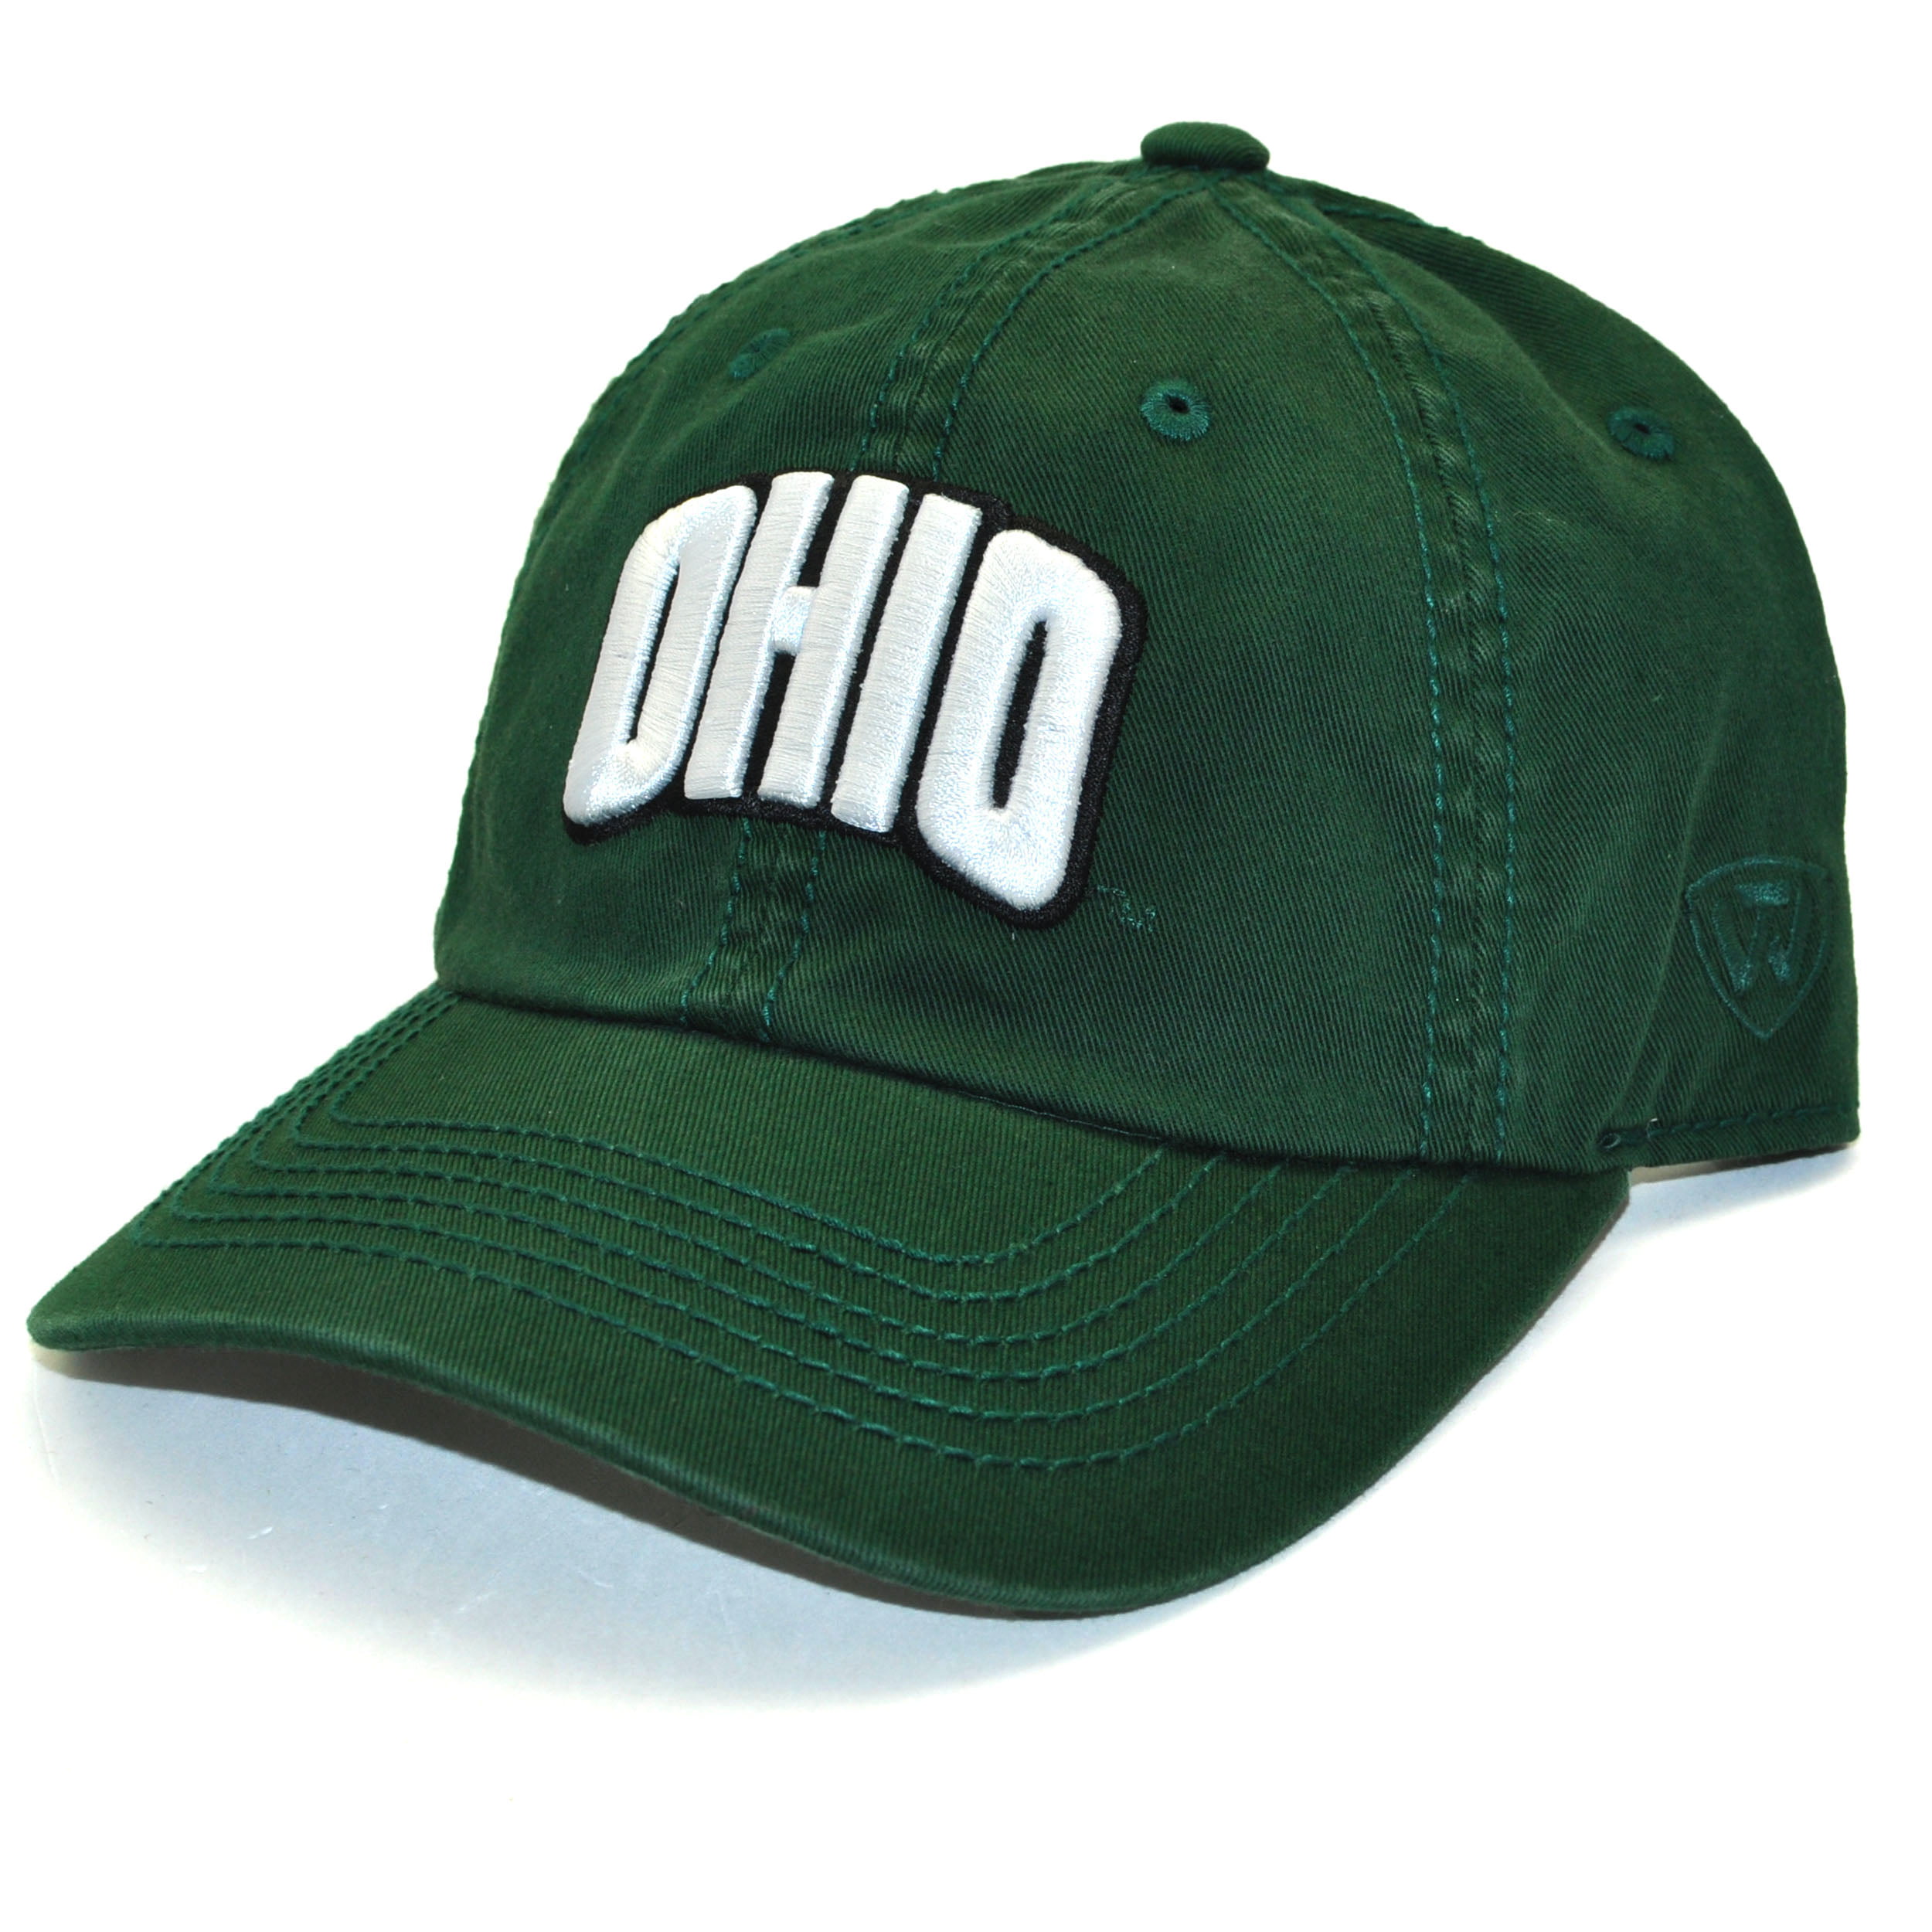 Ohio Bobcats Adult Game Bar Adjustable Hat White,